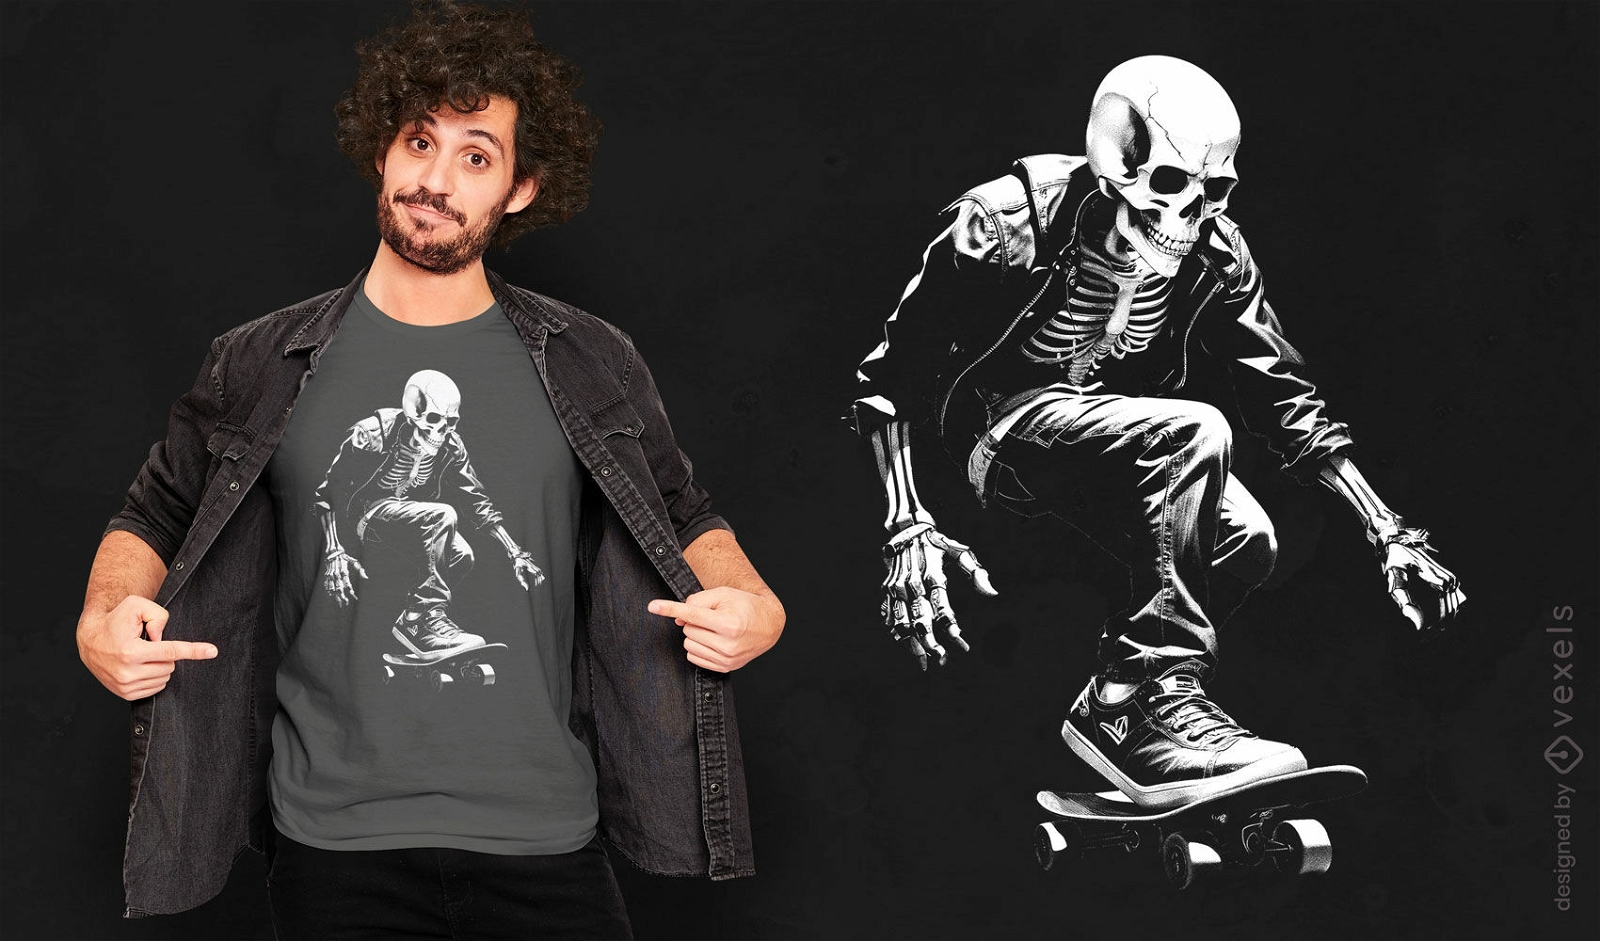 Skeleton skateboarder cool t-shirt design